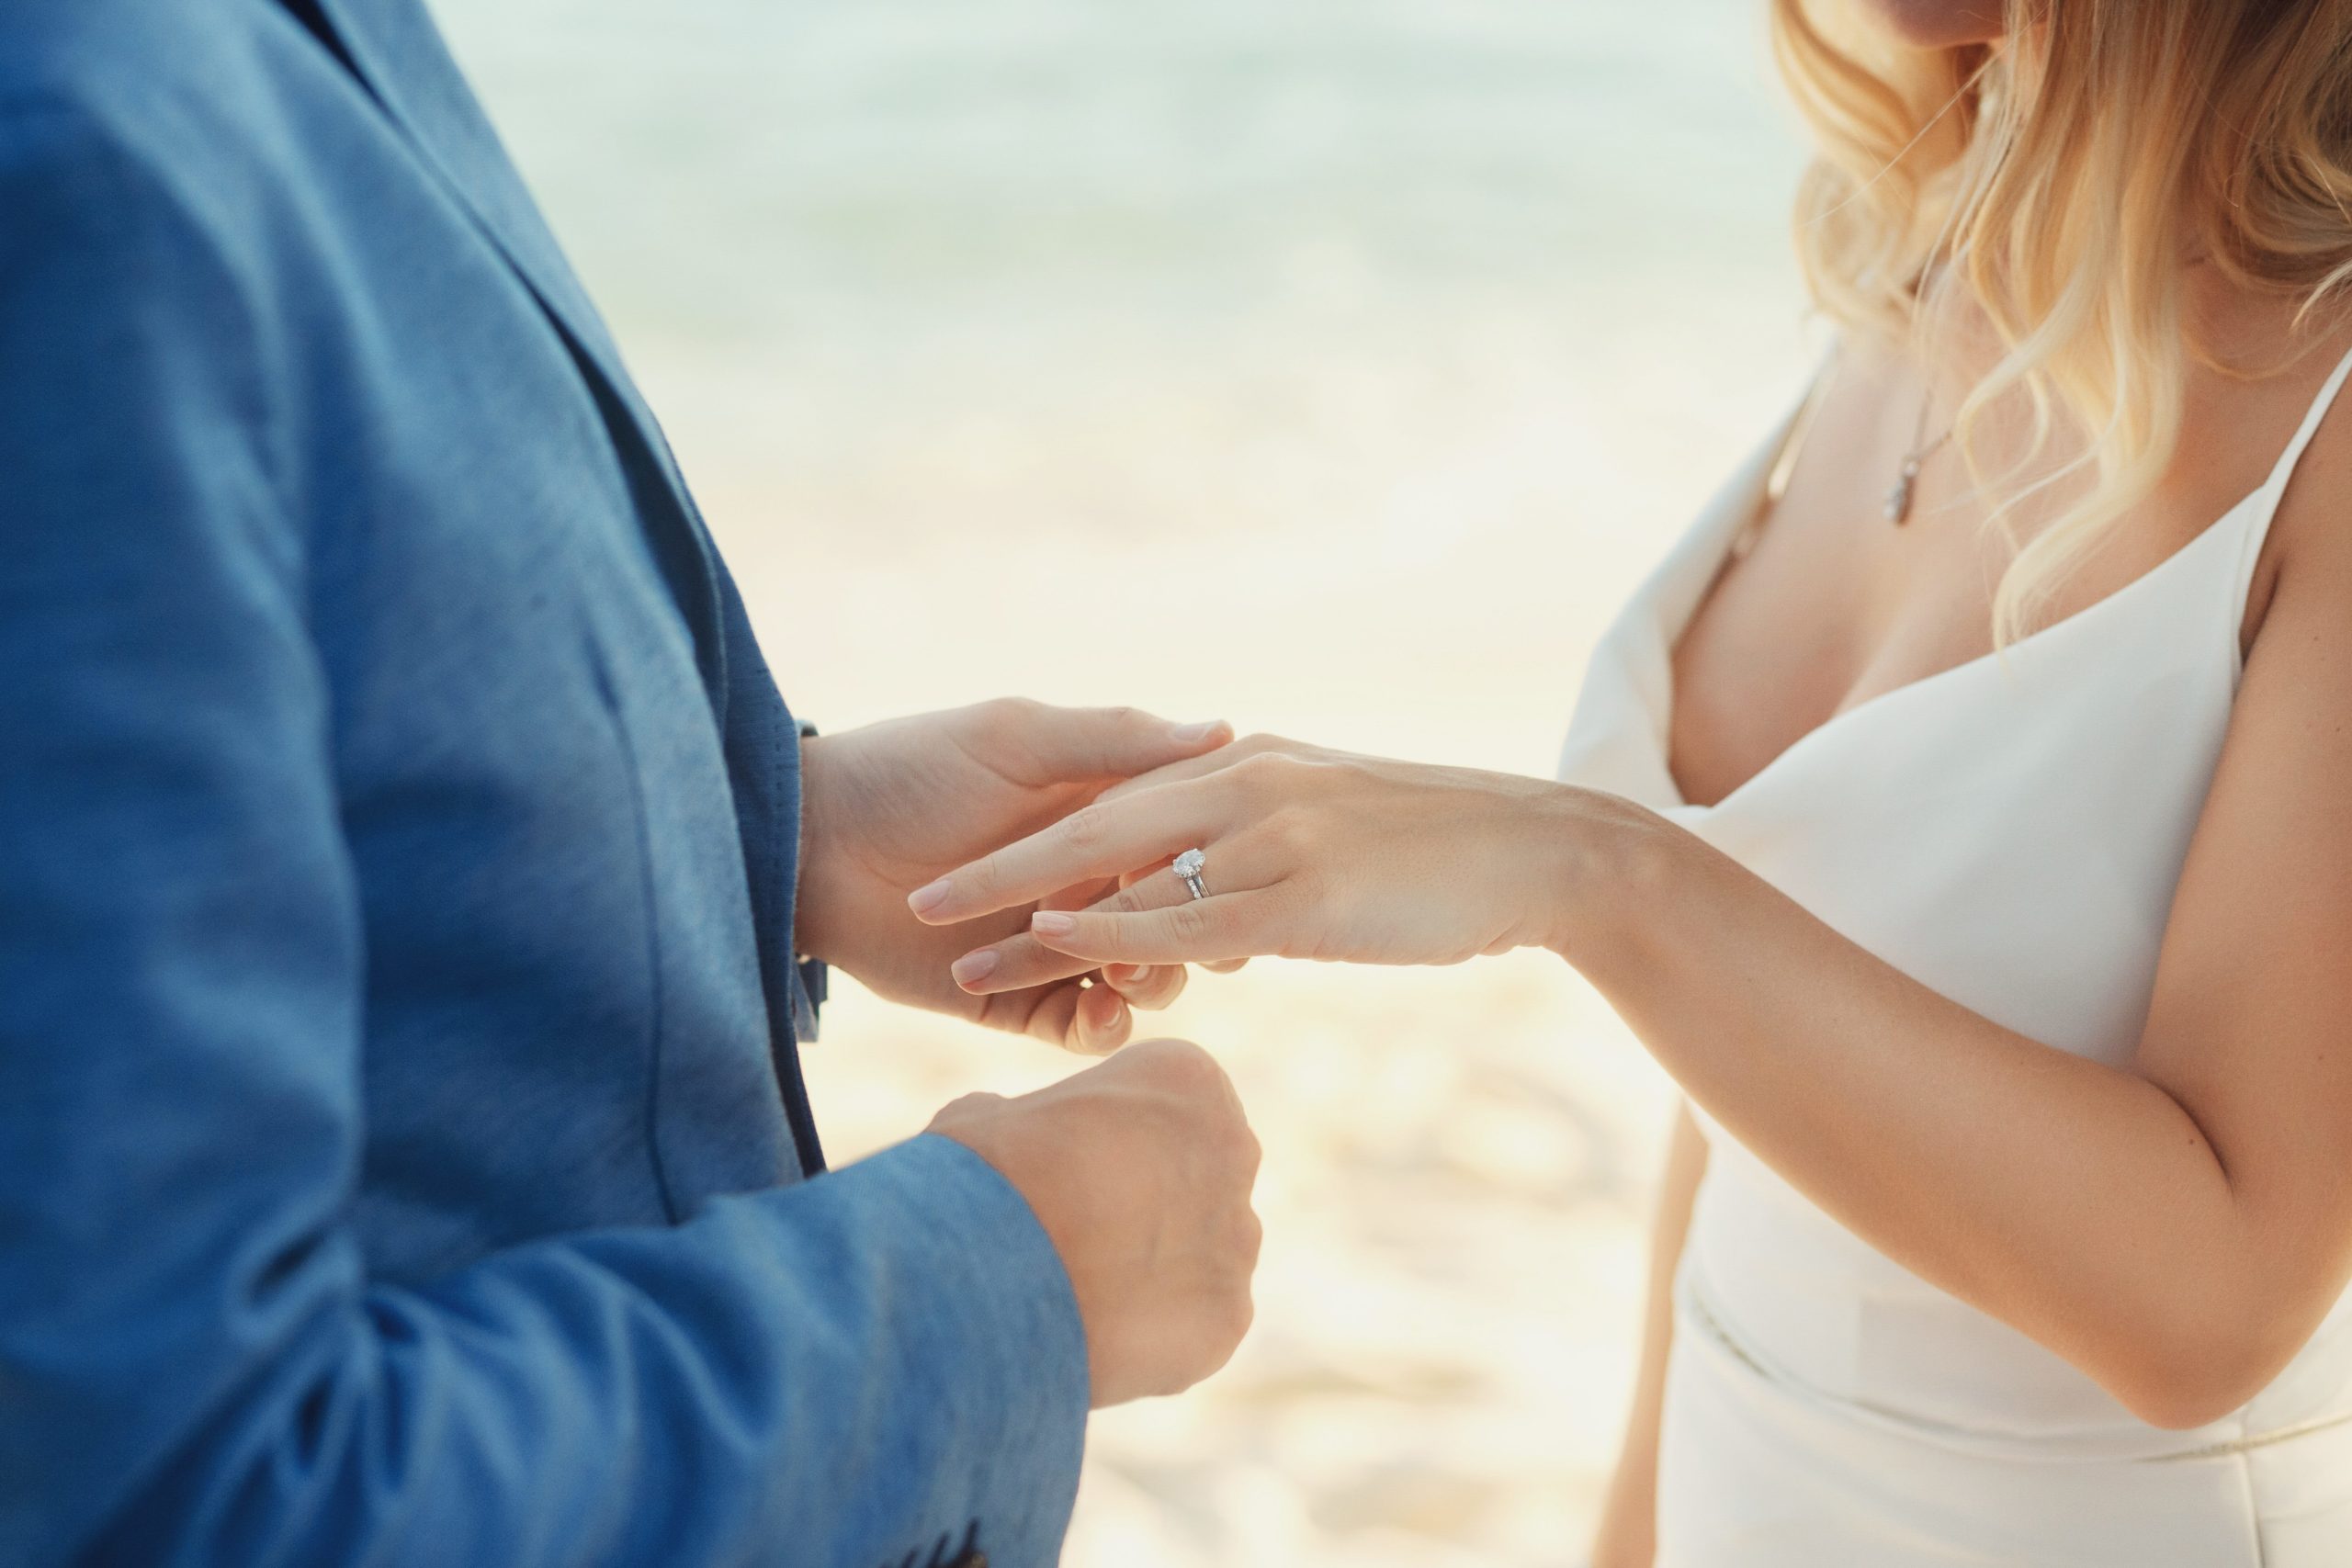 Groom in blue suit puts wedding ring on bride's hand